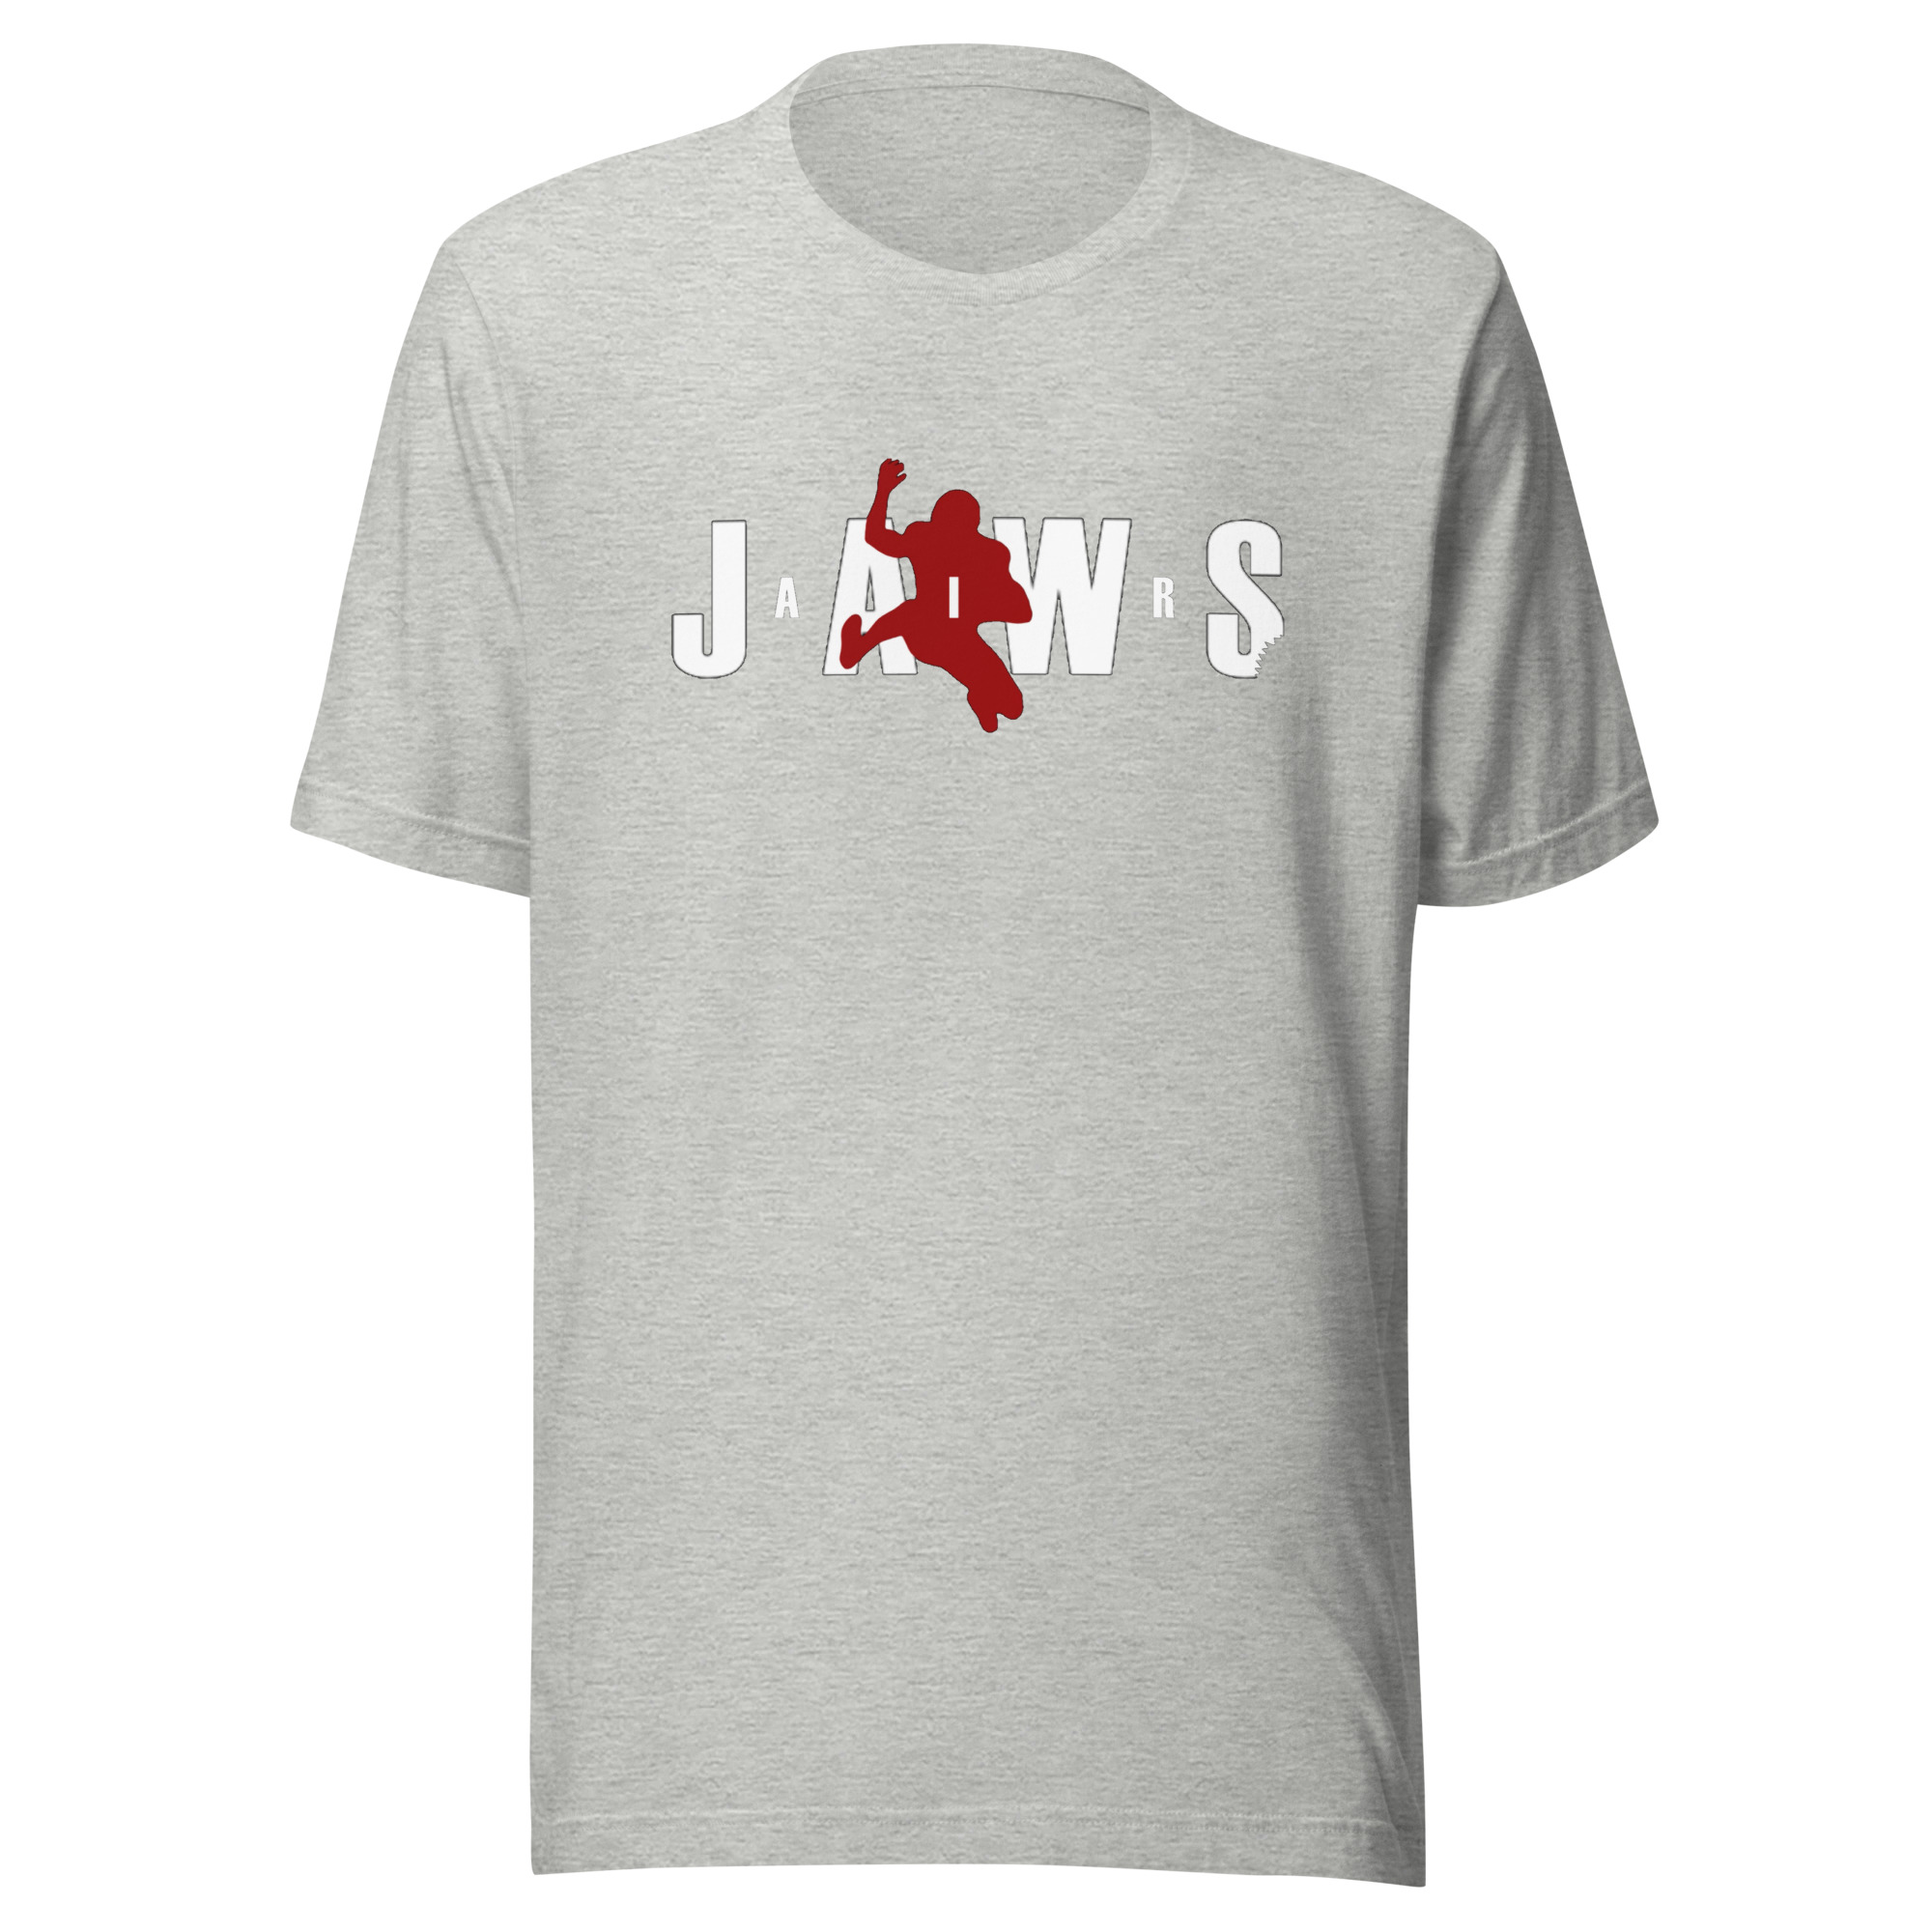 Jawhar Jordan Louisville Cardinals vintage retro shirt, hoodie, sweater and  v-neck t-shirt